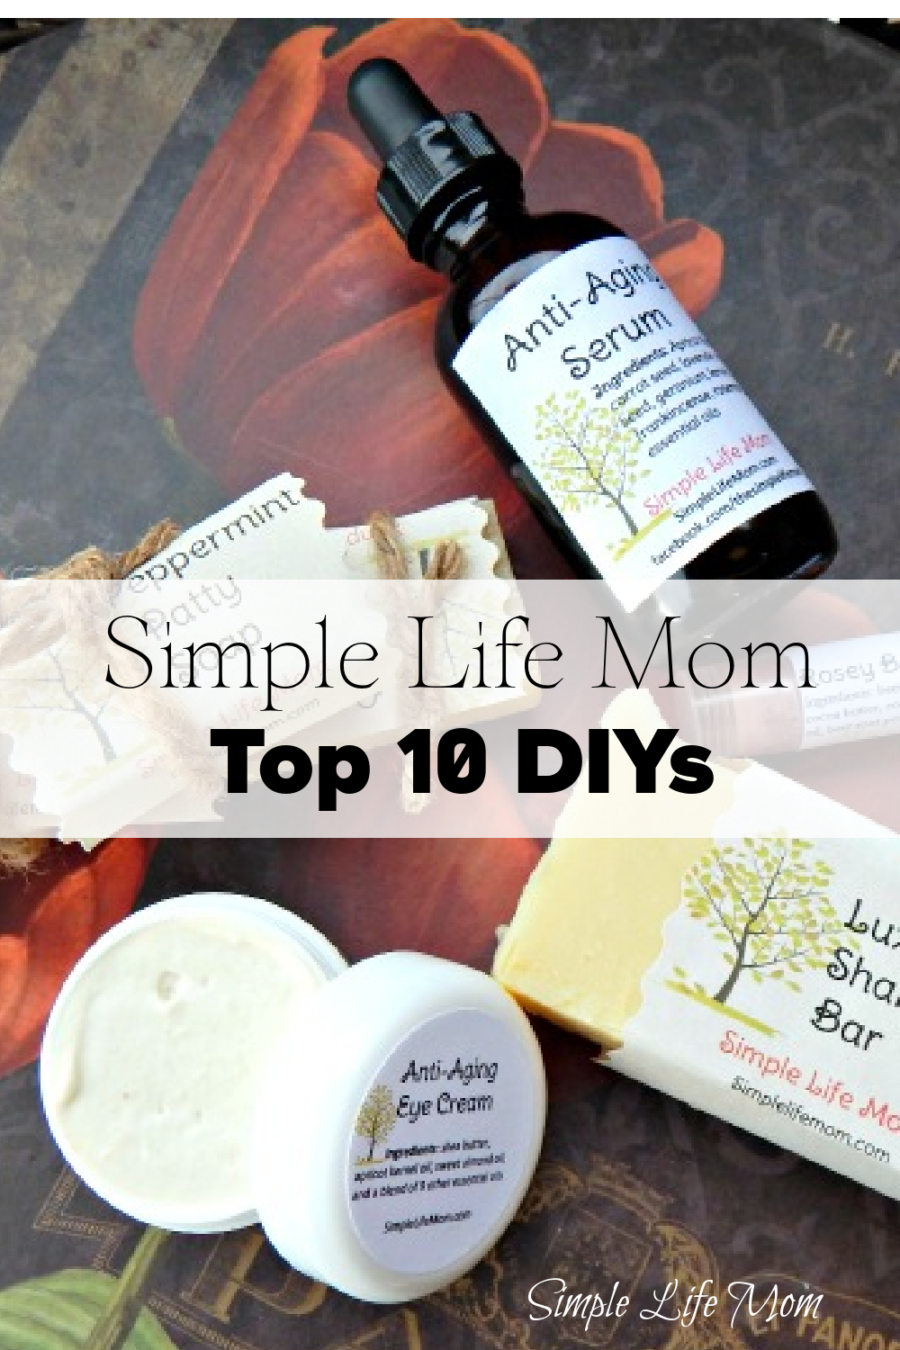 Top 10 DIYs from Simple Life Mom